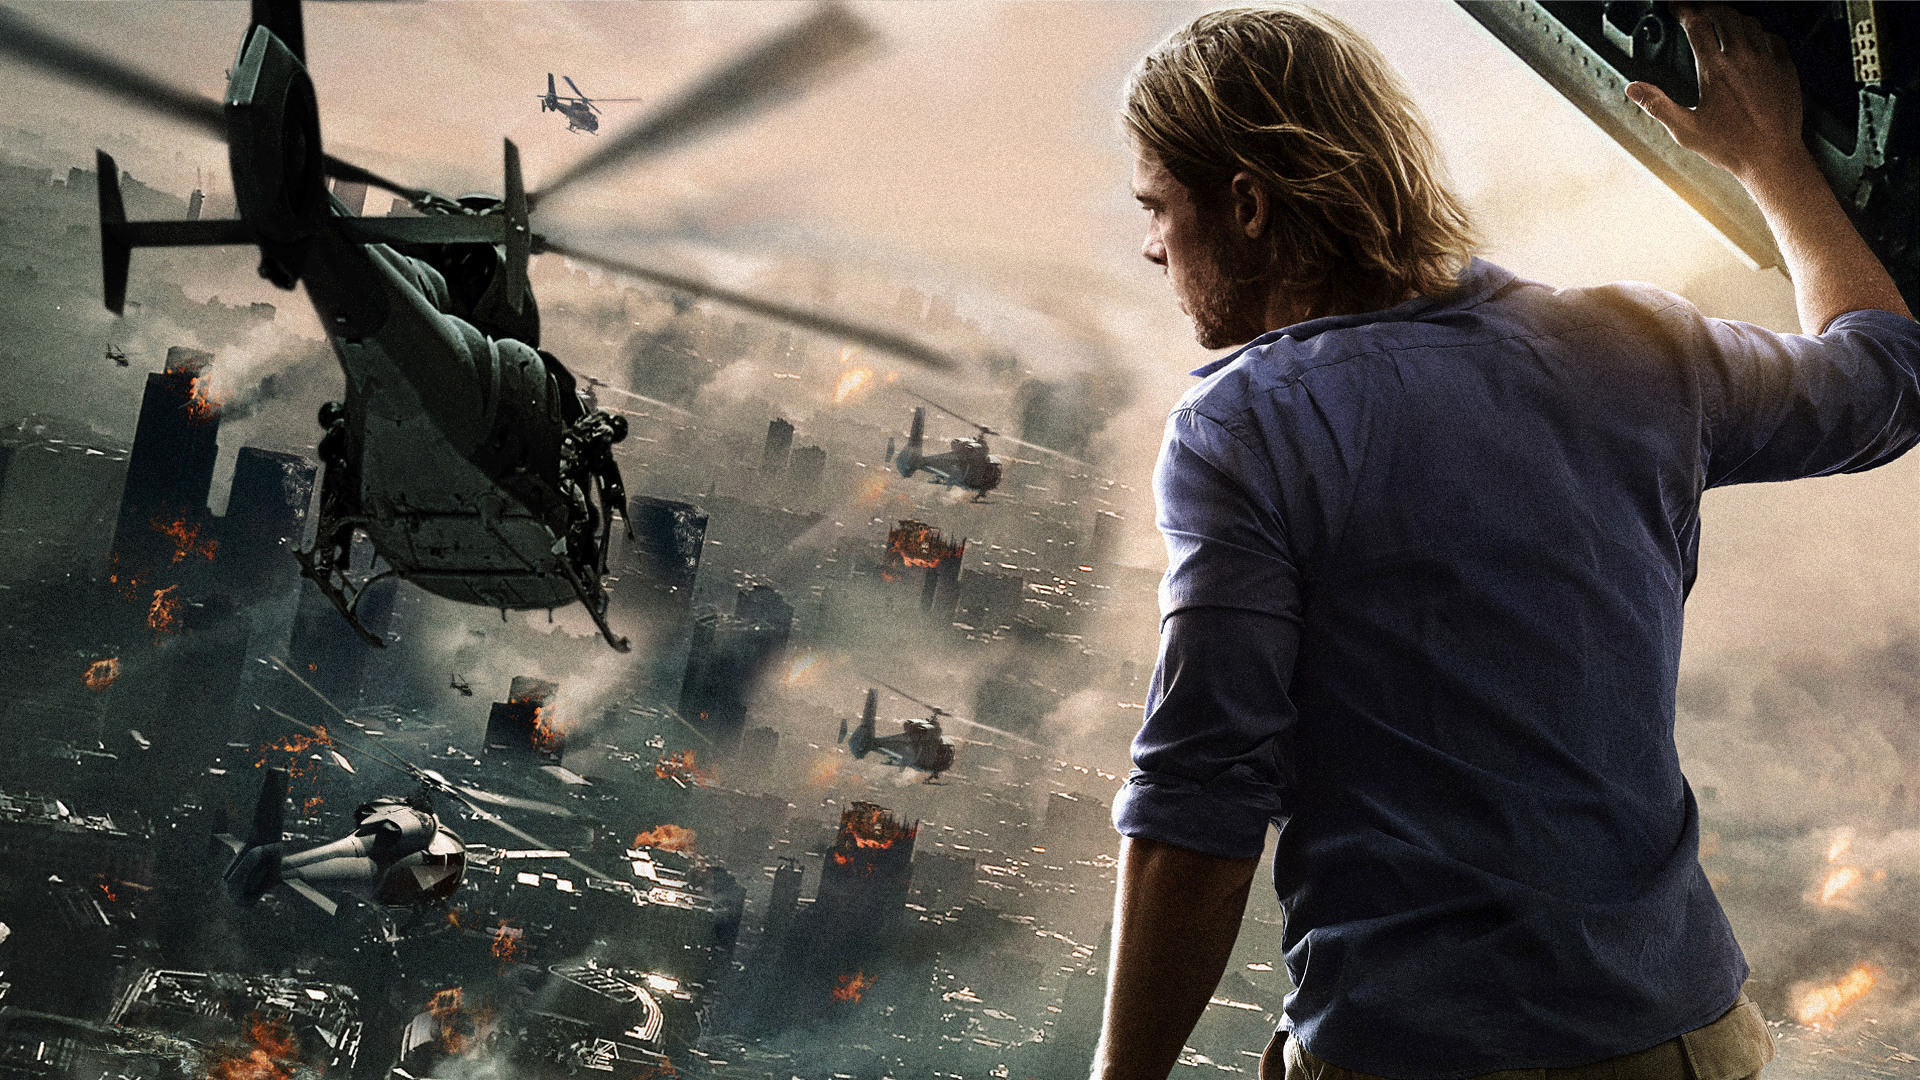 Brad Pitt's World War Z 2 back on track?